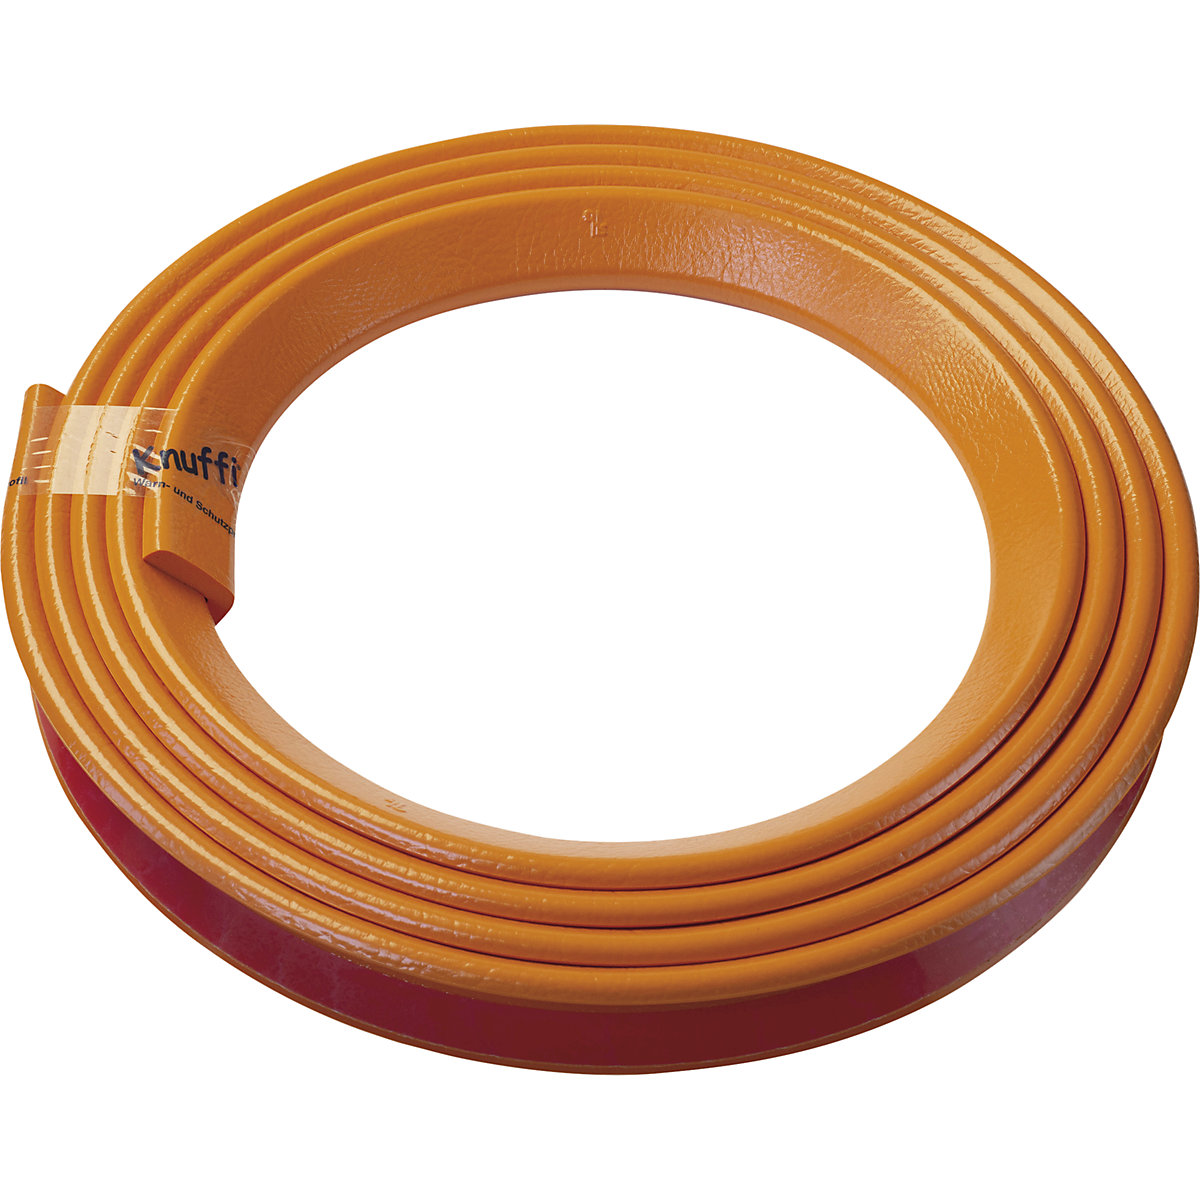 Knuffi® corner protection – SHG, type H, 1 x 5 m roll, orange-11